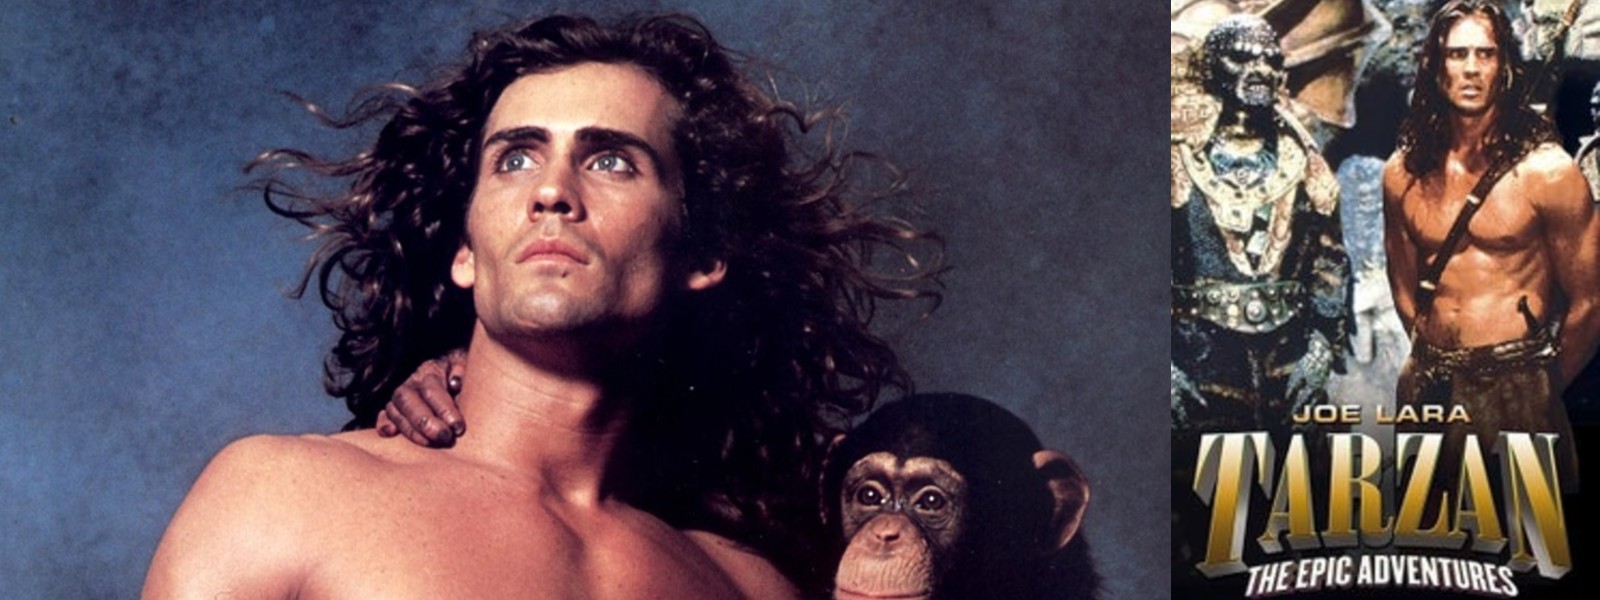 Joe Lara, ‘Tarzan: The Epic Adventures’ Star, Dies in Plane Crash at 58